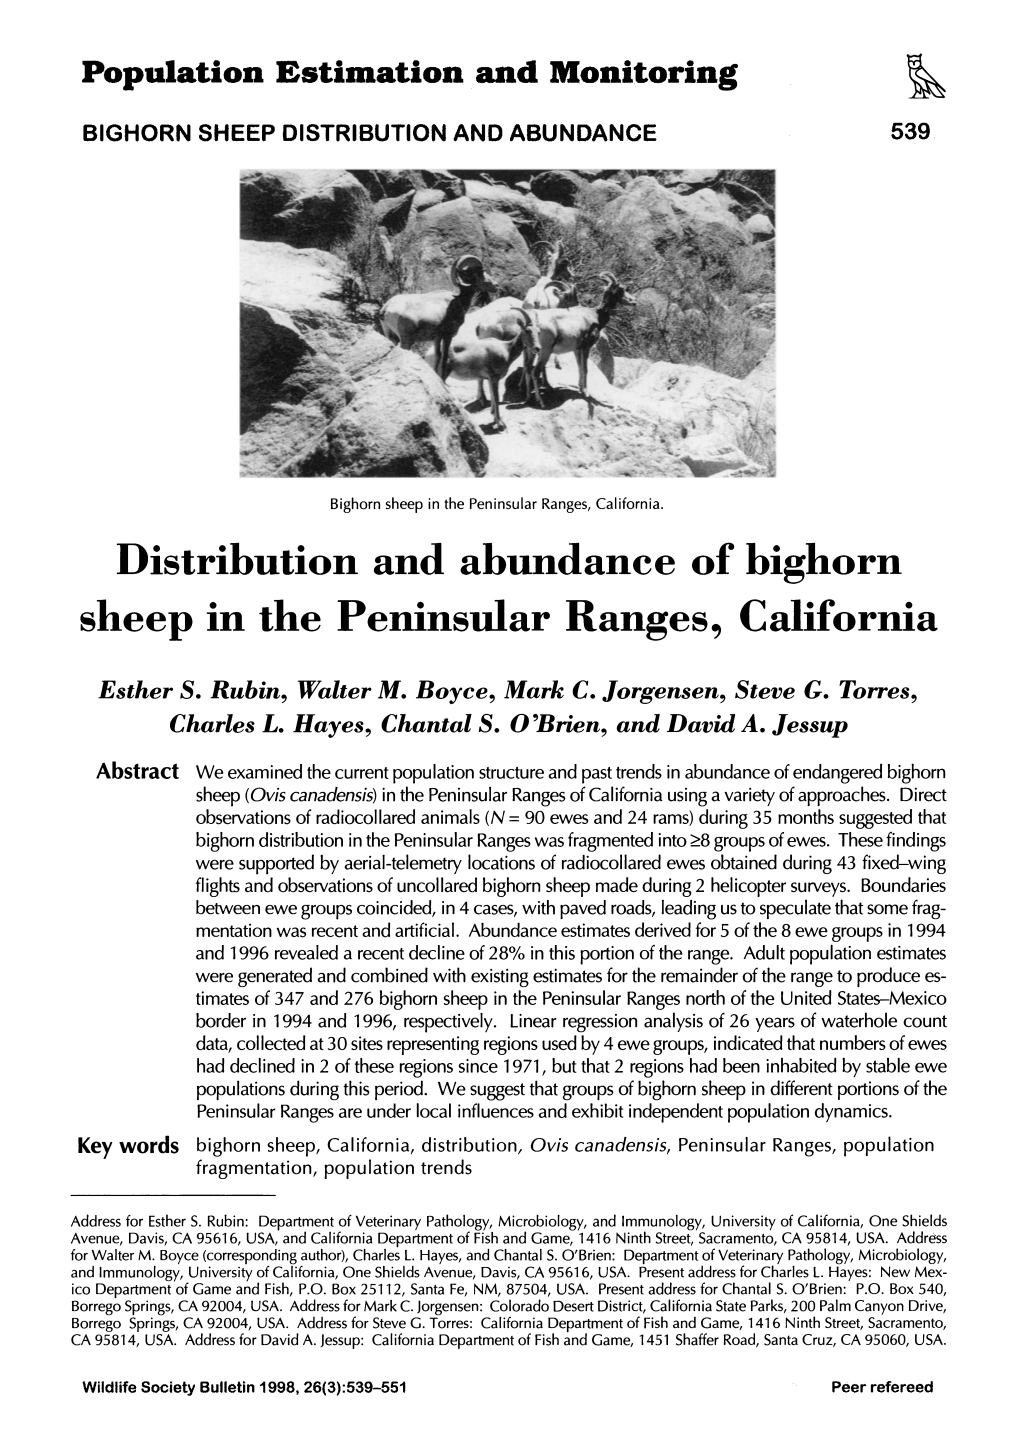 Distribution and Abundance of Bighorn Sheep in the Peninsular Rangess, California